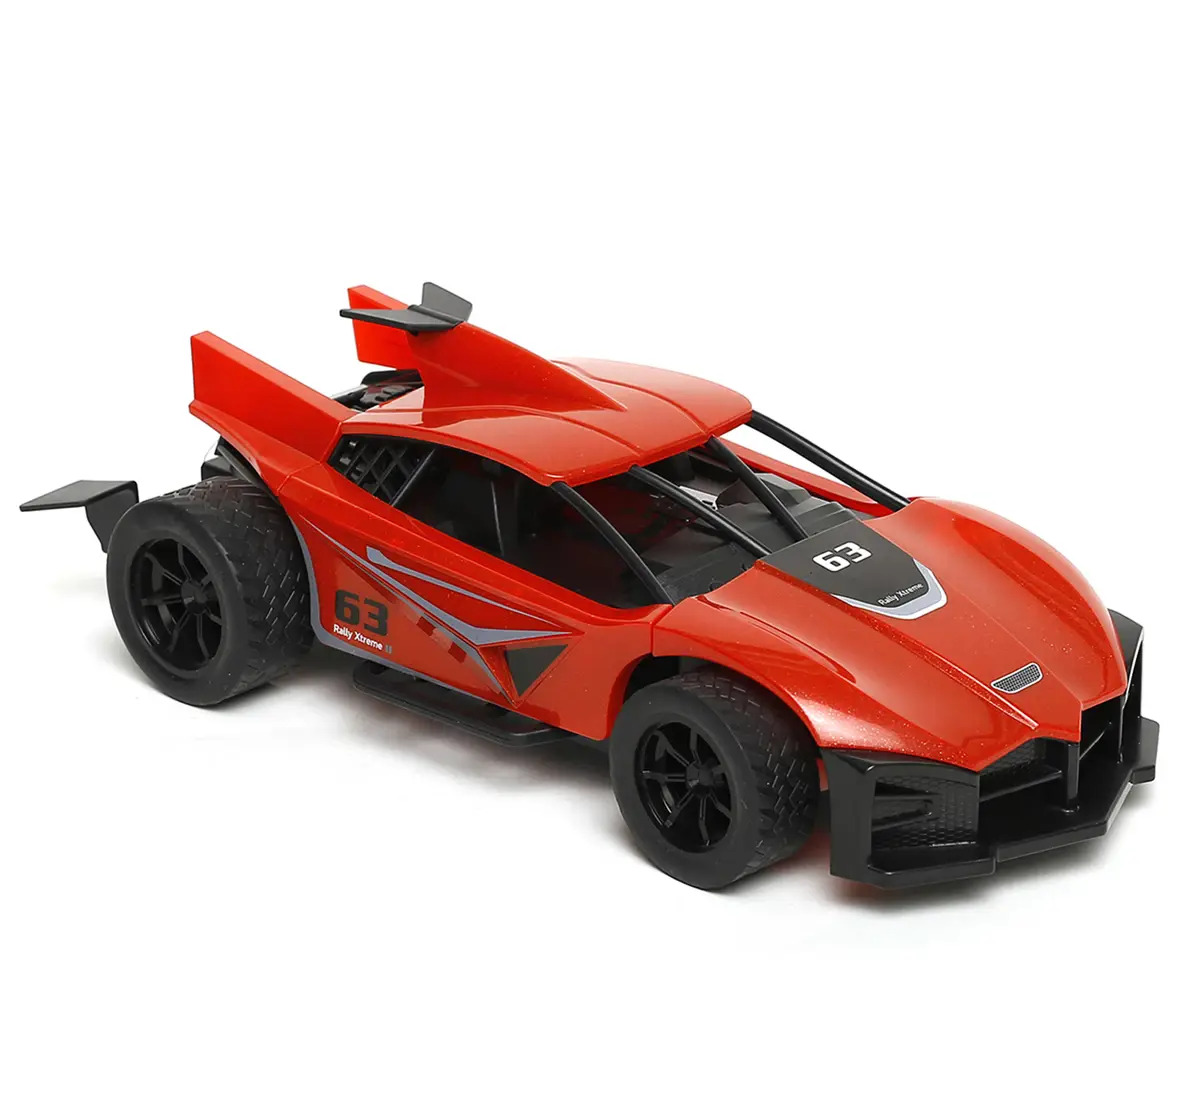 Ralleys Spray Racing Car, RC Car for Kids, 6Y+, Multicolour